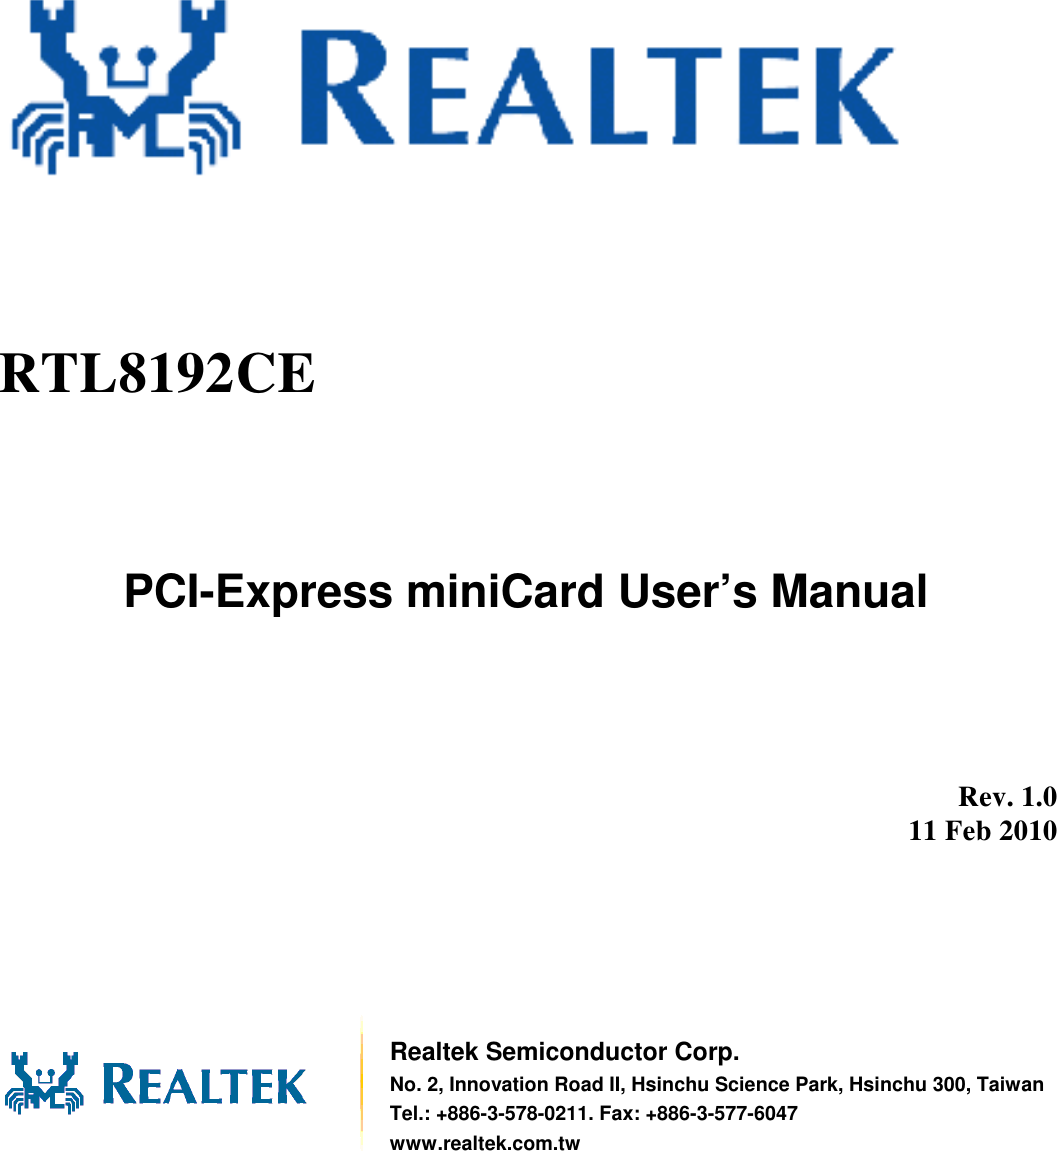           RTL8192CE       PCI-Express miniCard User’s Manual         Rev. 1.0 11 Feb 2010        Realtek Semiconductor Corp. No. 2, Innovation Road II, Hsinchu Science Park, Hsinchu 300, TaiwanTel.: +886-3-578-0211. Fax: +886-3-577-6047 www.realtek.com.tw 